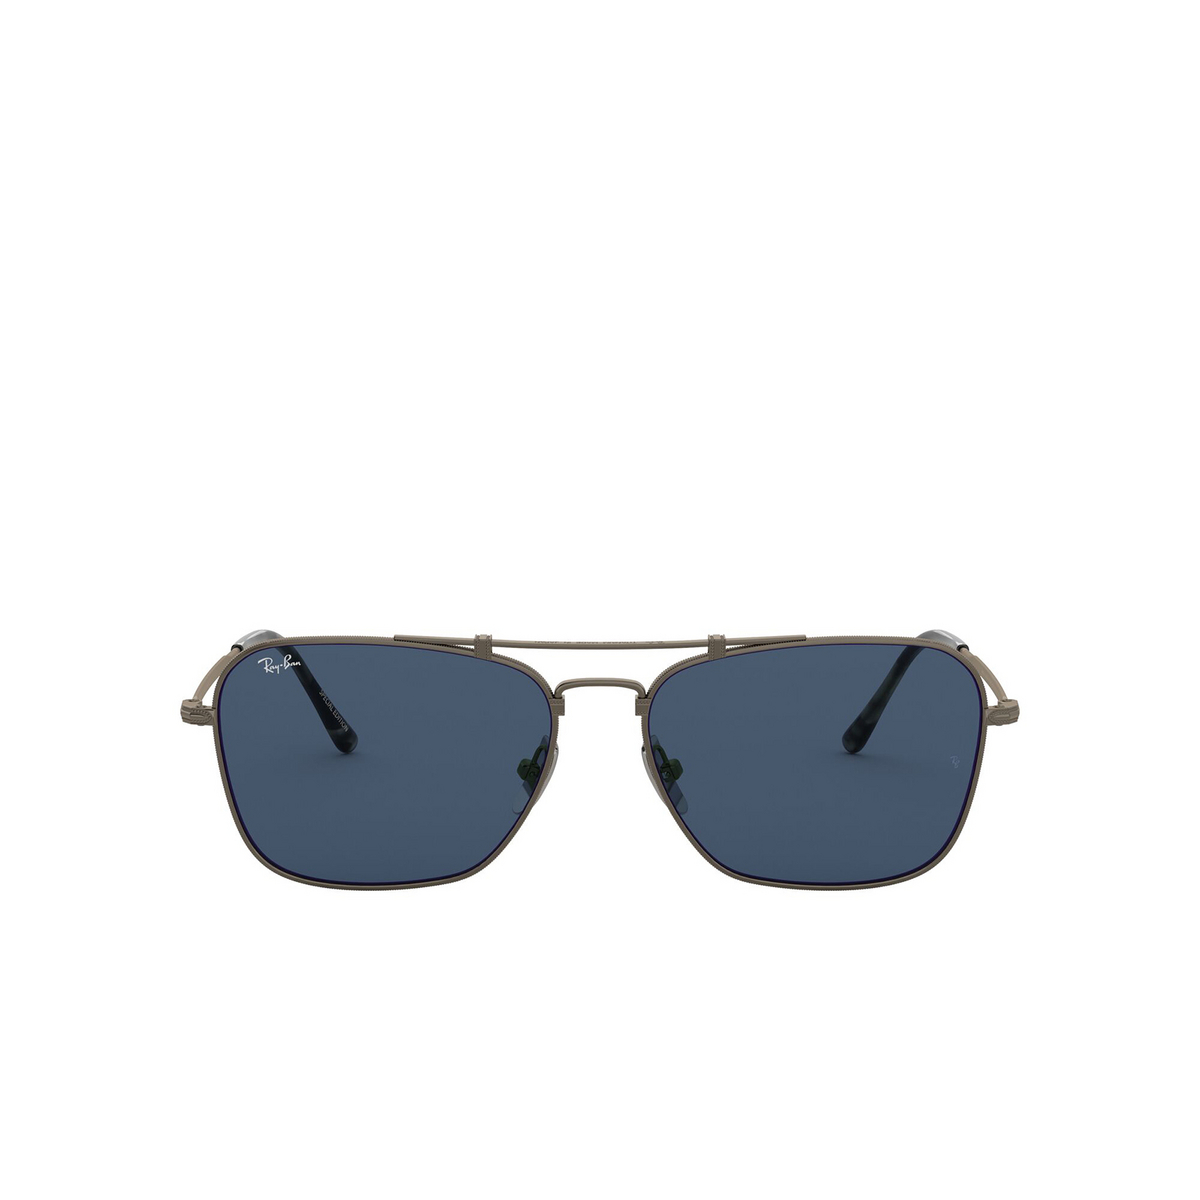 Ray-Ban® Square Sunglasses: Titanium RB8136 color Demi Gloss Pewter 9138T0 - 1/3.